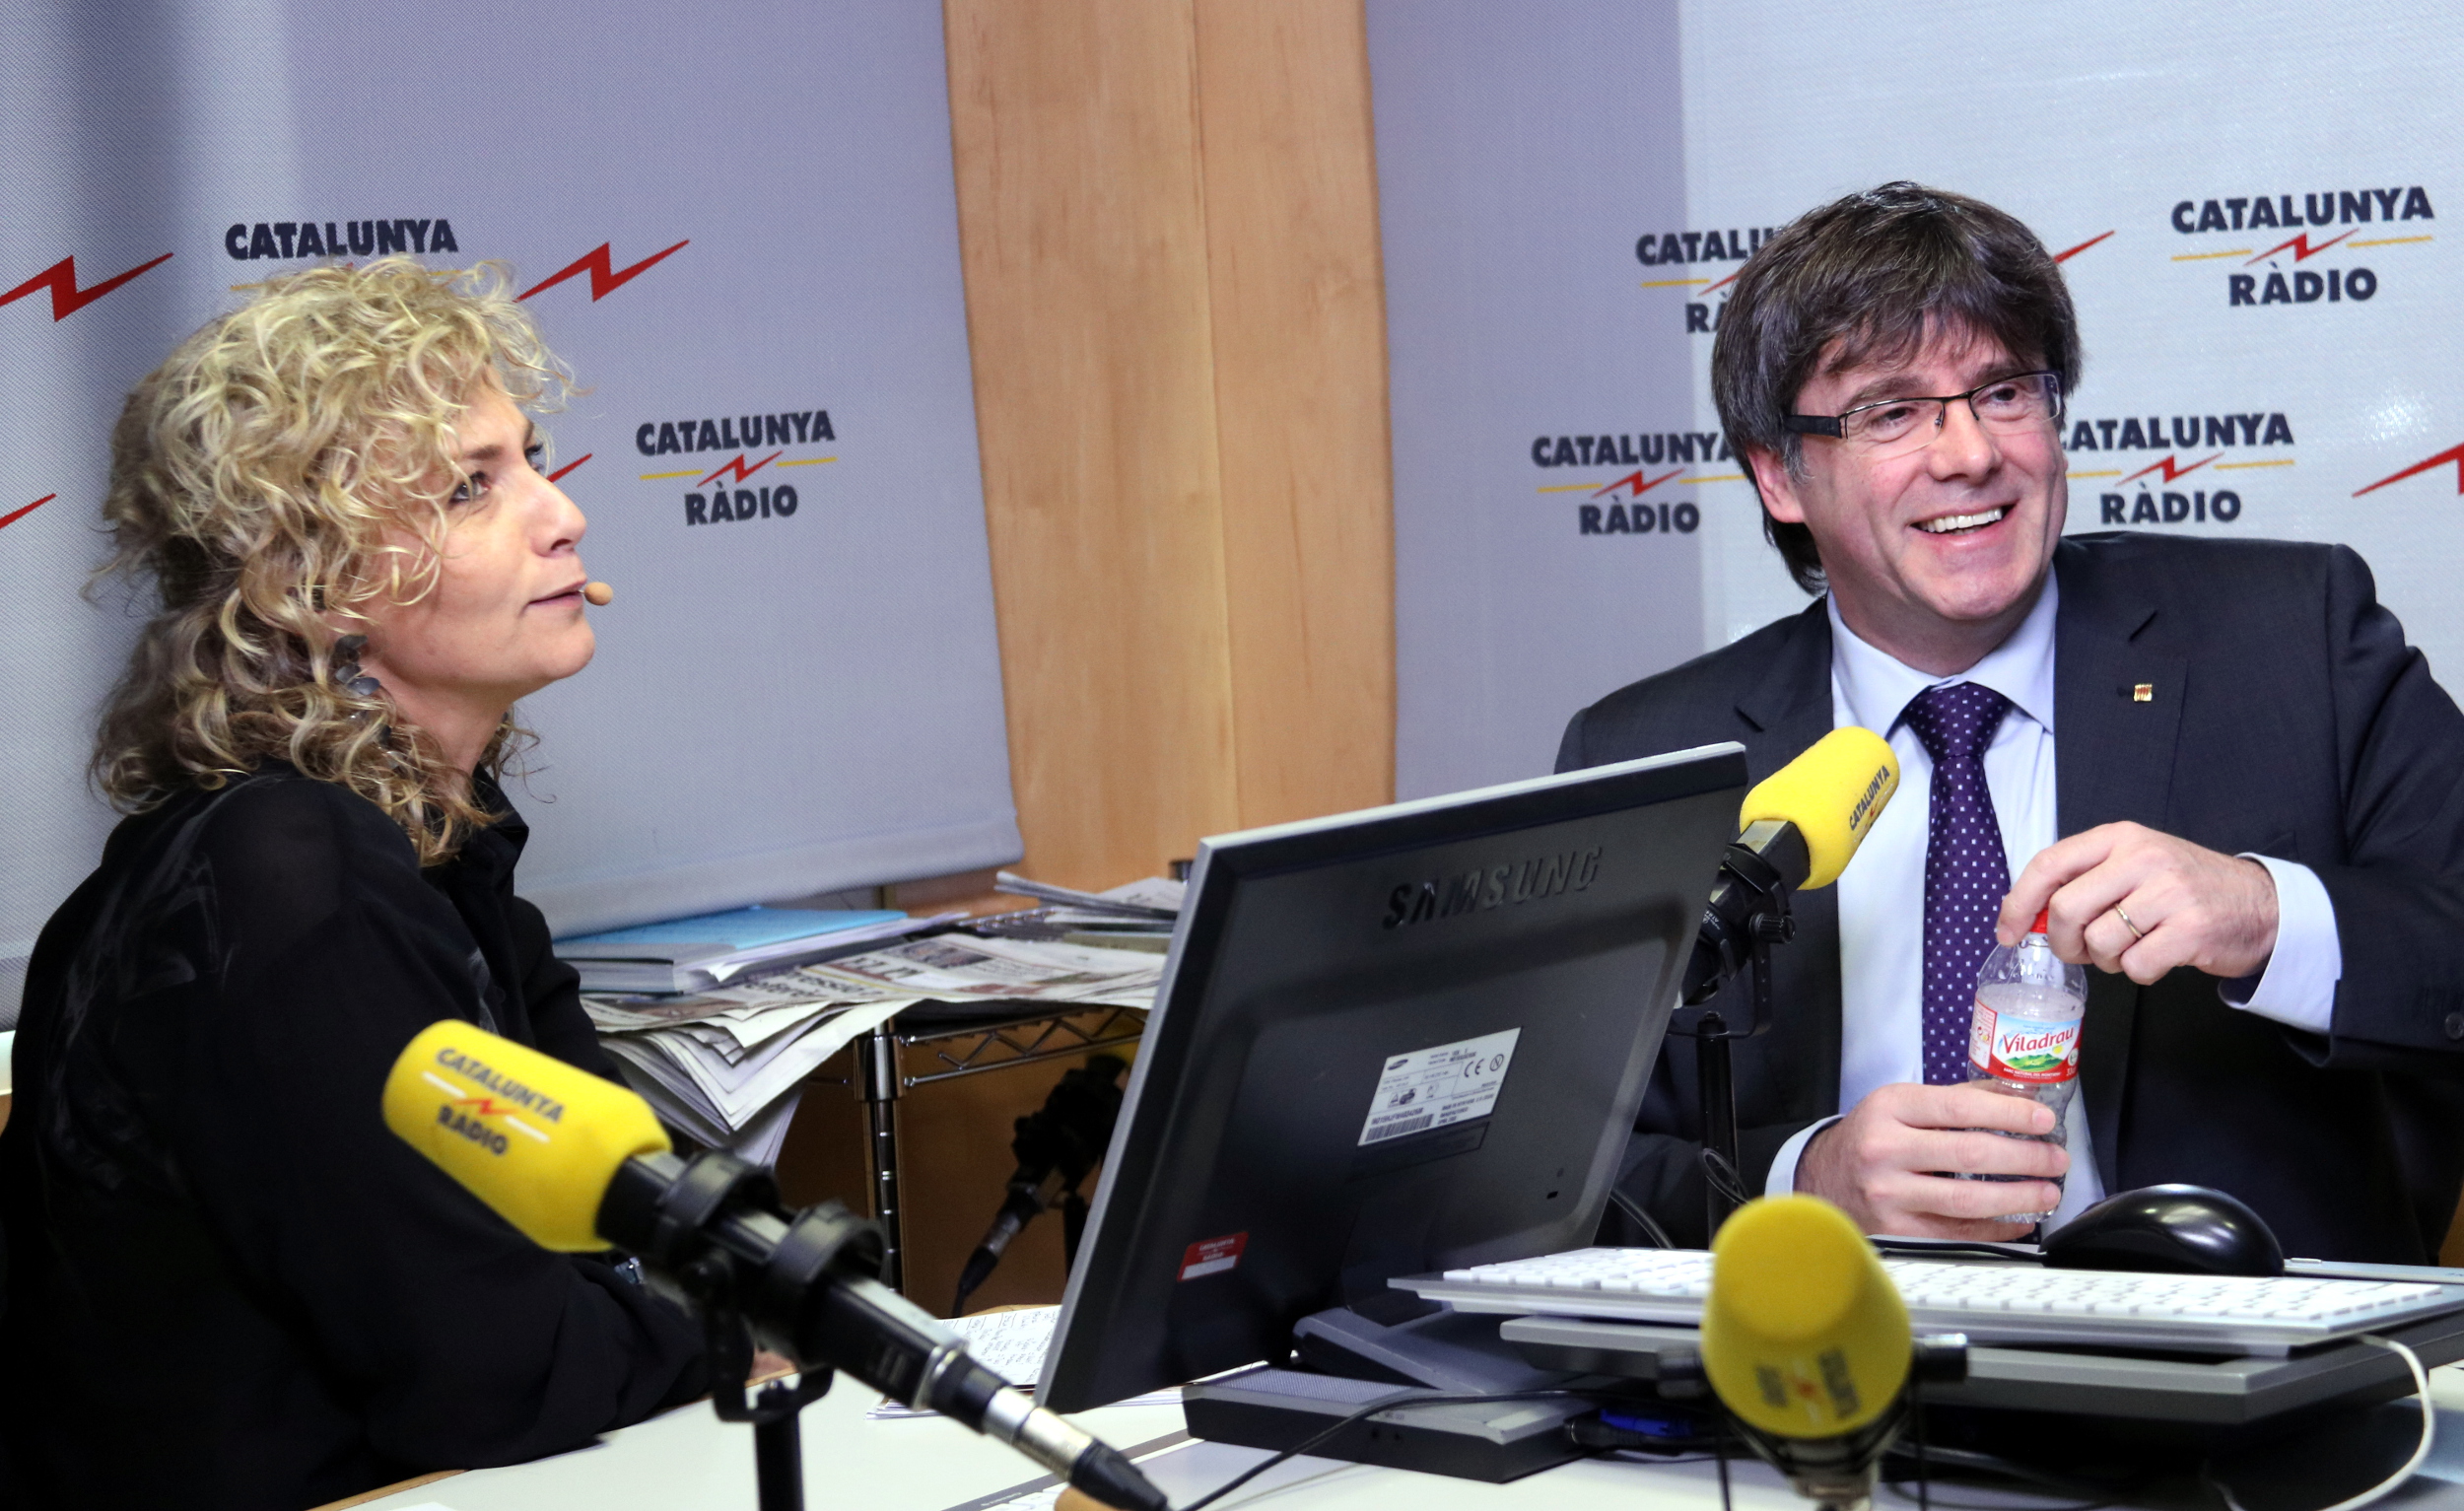 Mònica Terribas interviewing Catalan president Carles Puigdemont in April (by Jordi Bataller)